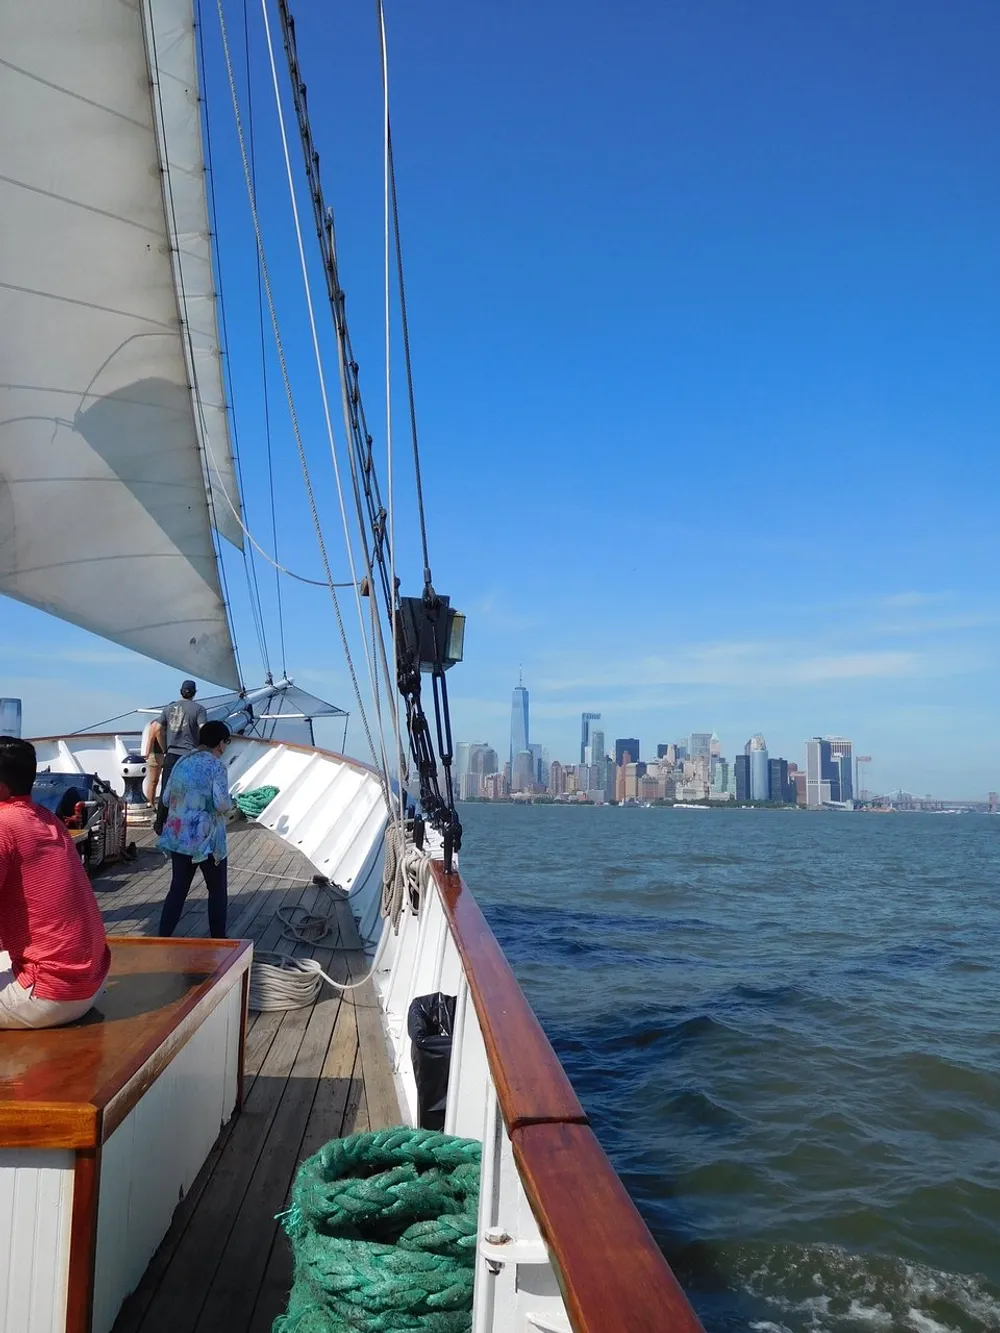 Passengers aboard a sailboat enjoy the views of a sprawling city skyline under a clear blue sky